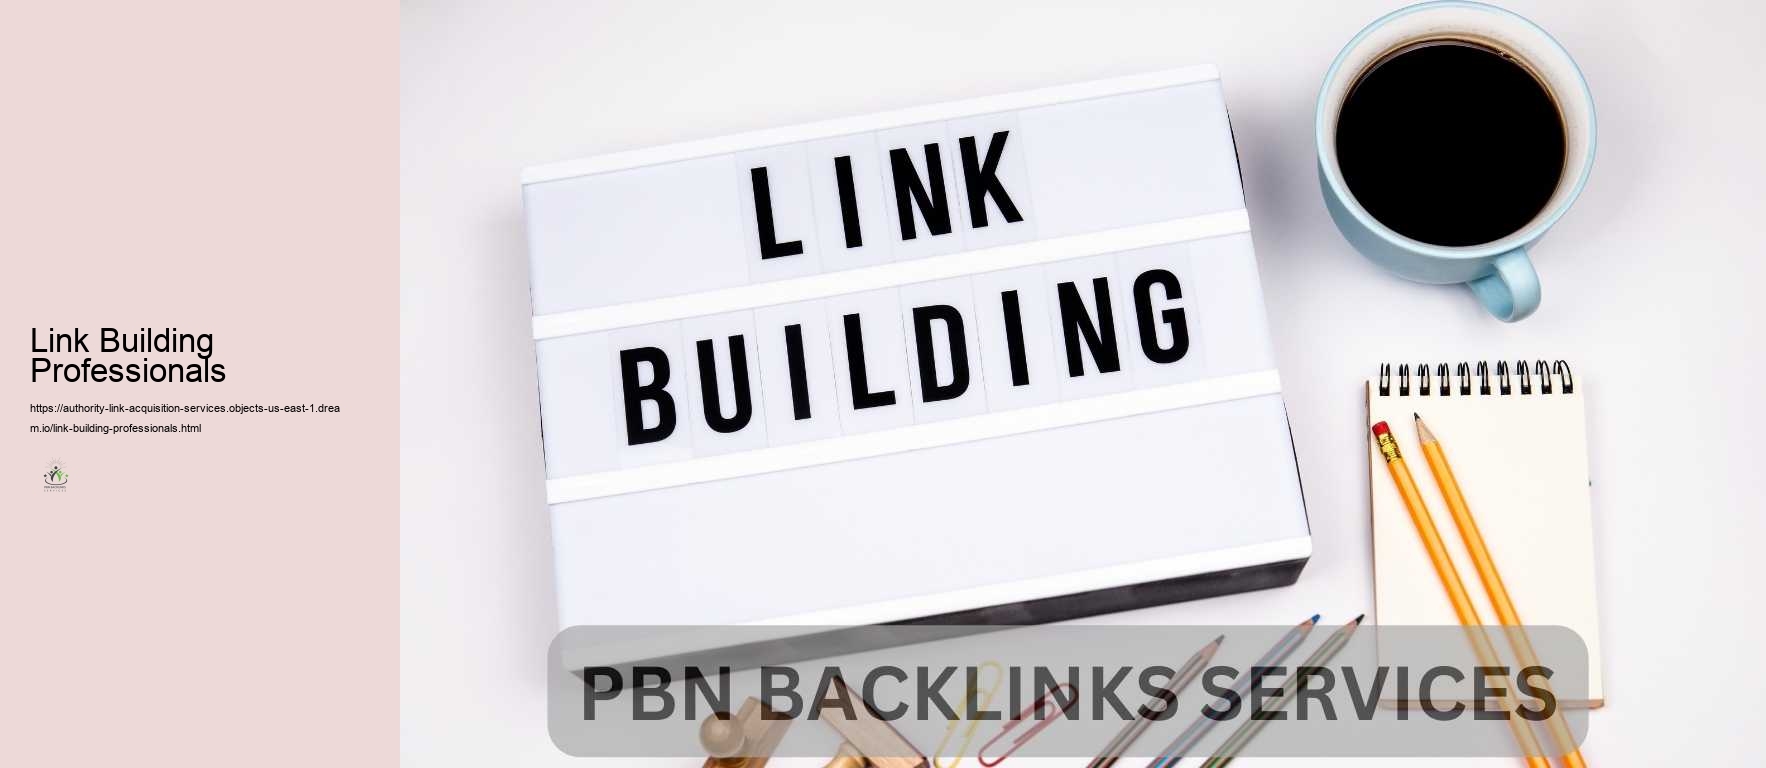 Link Building Professionals